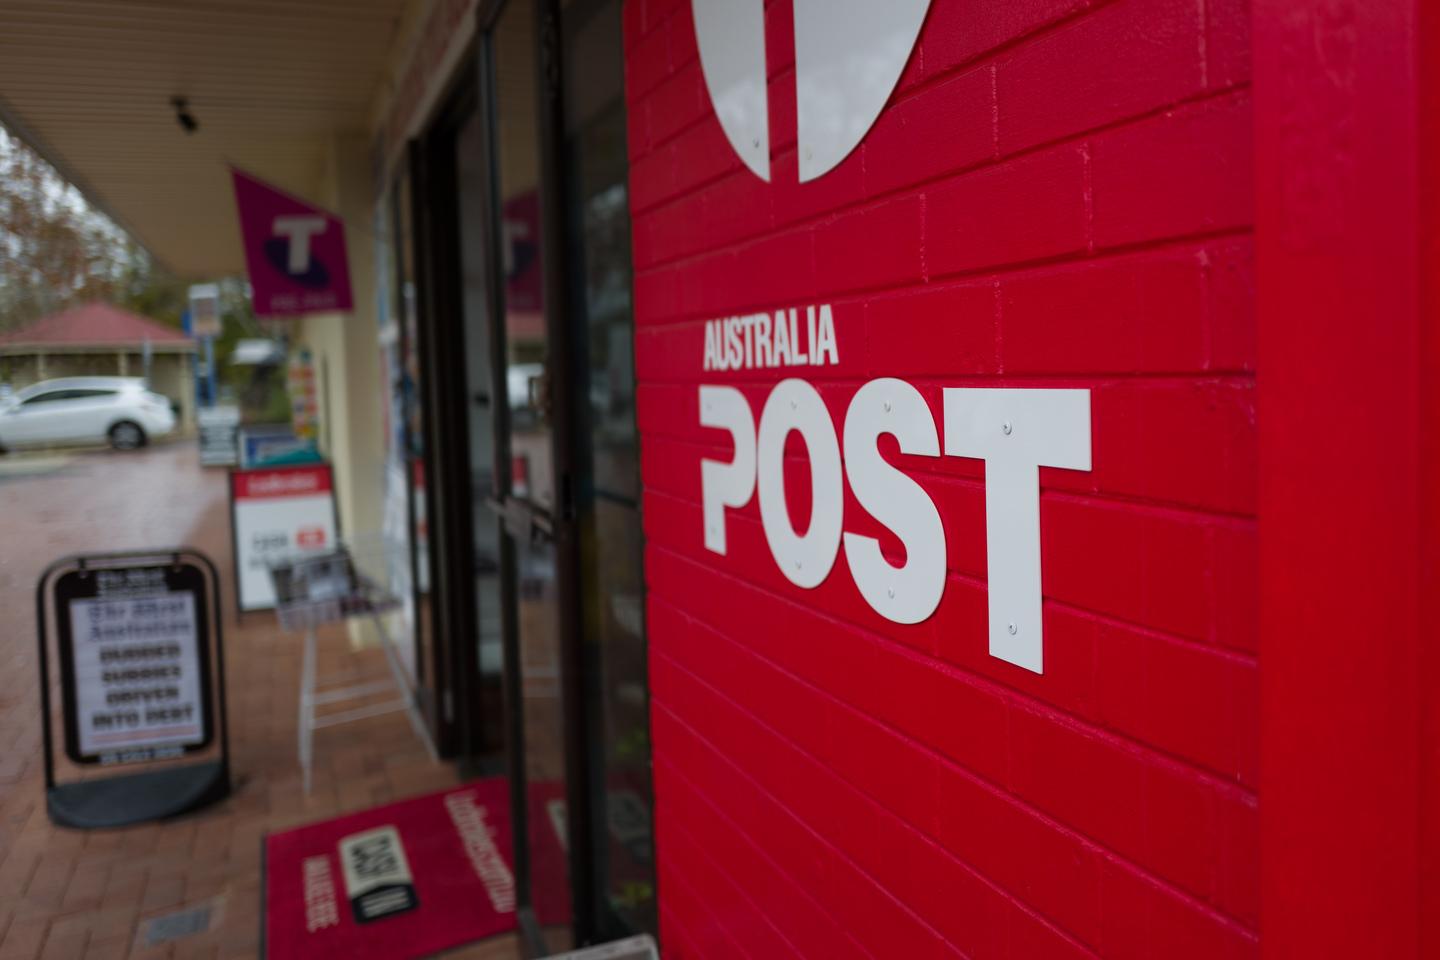 Australia Post culture under investigation